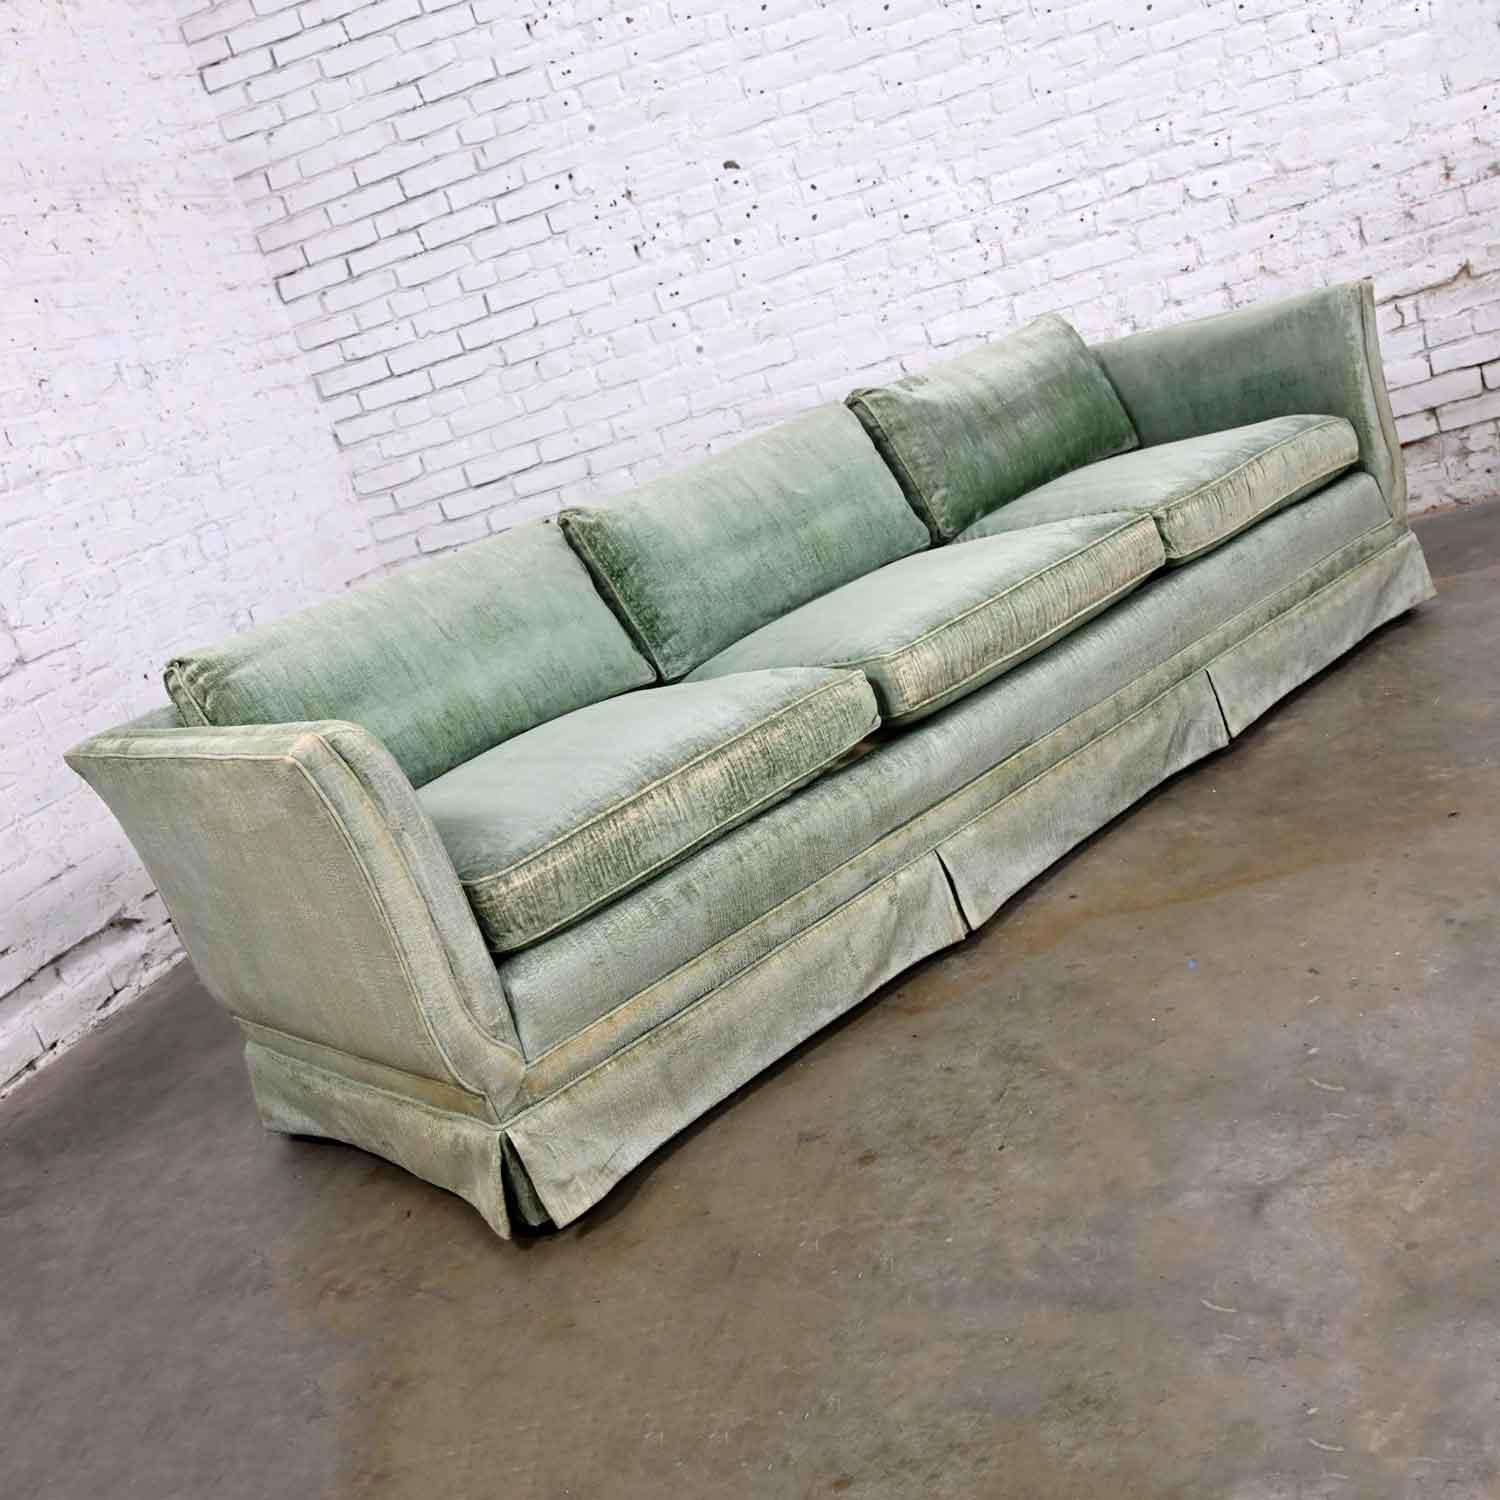 henredon couch